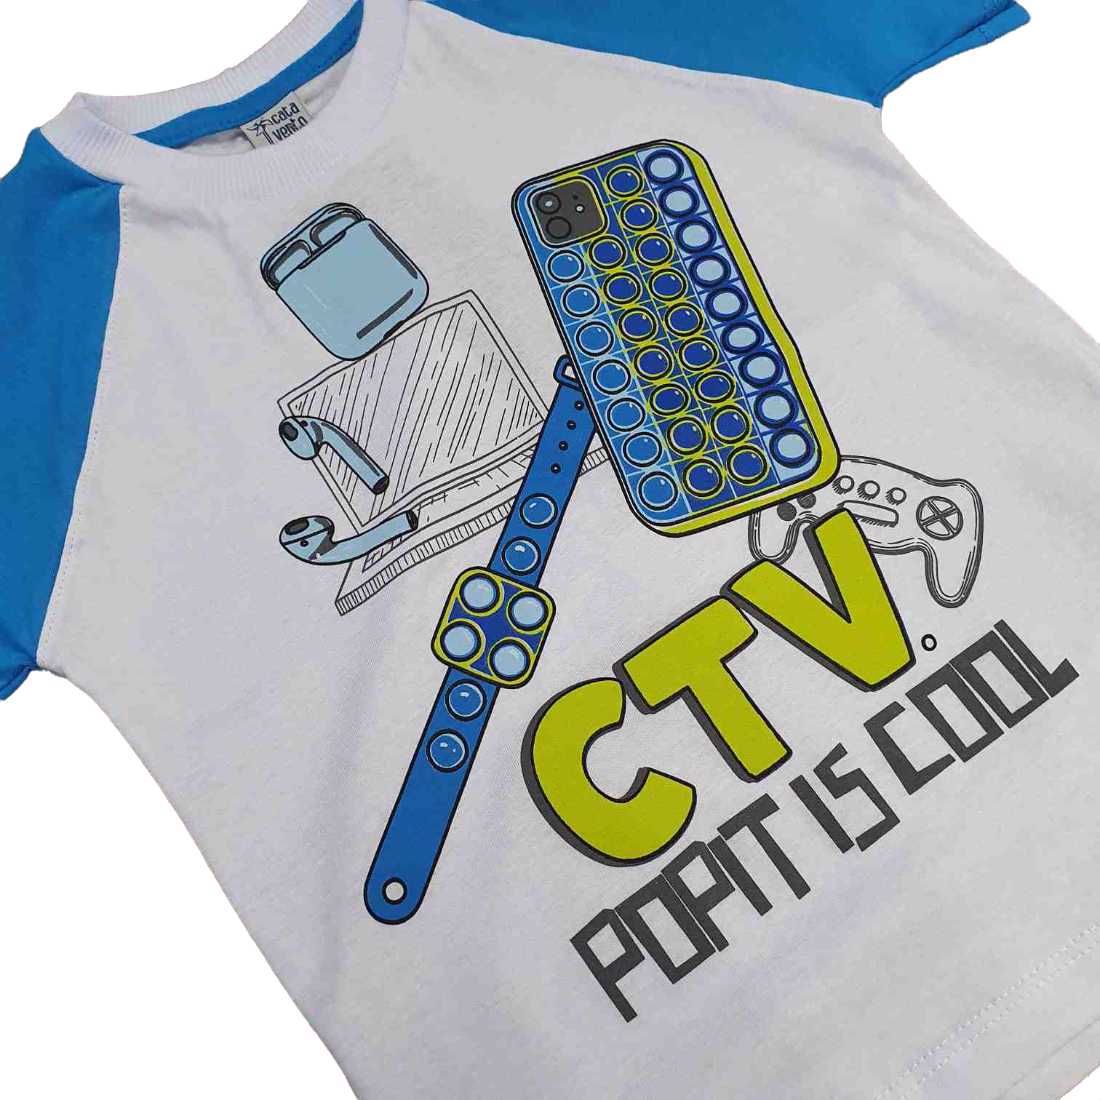 Camiseta Infantil CTV Electronics